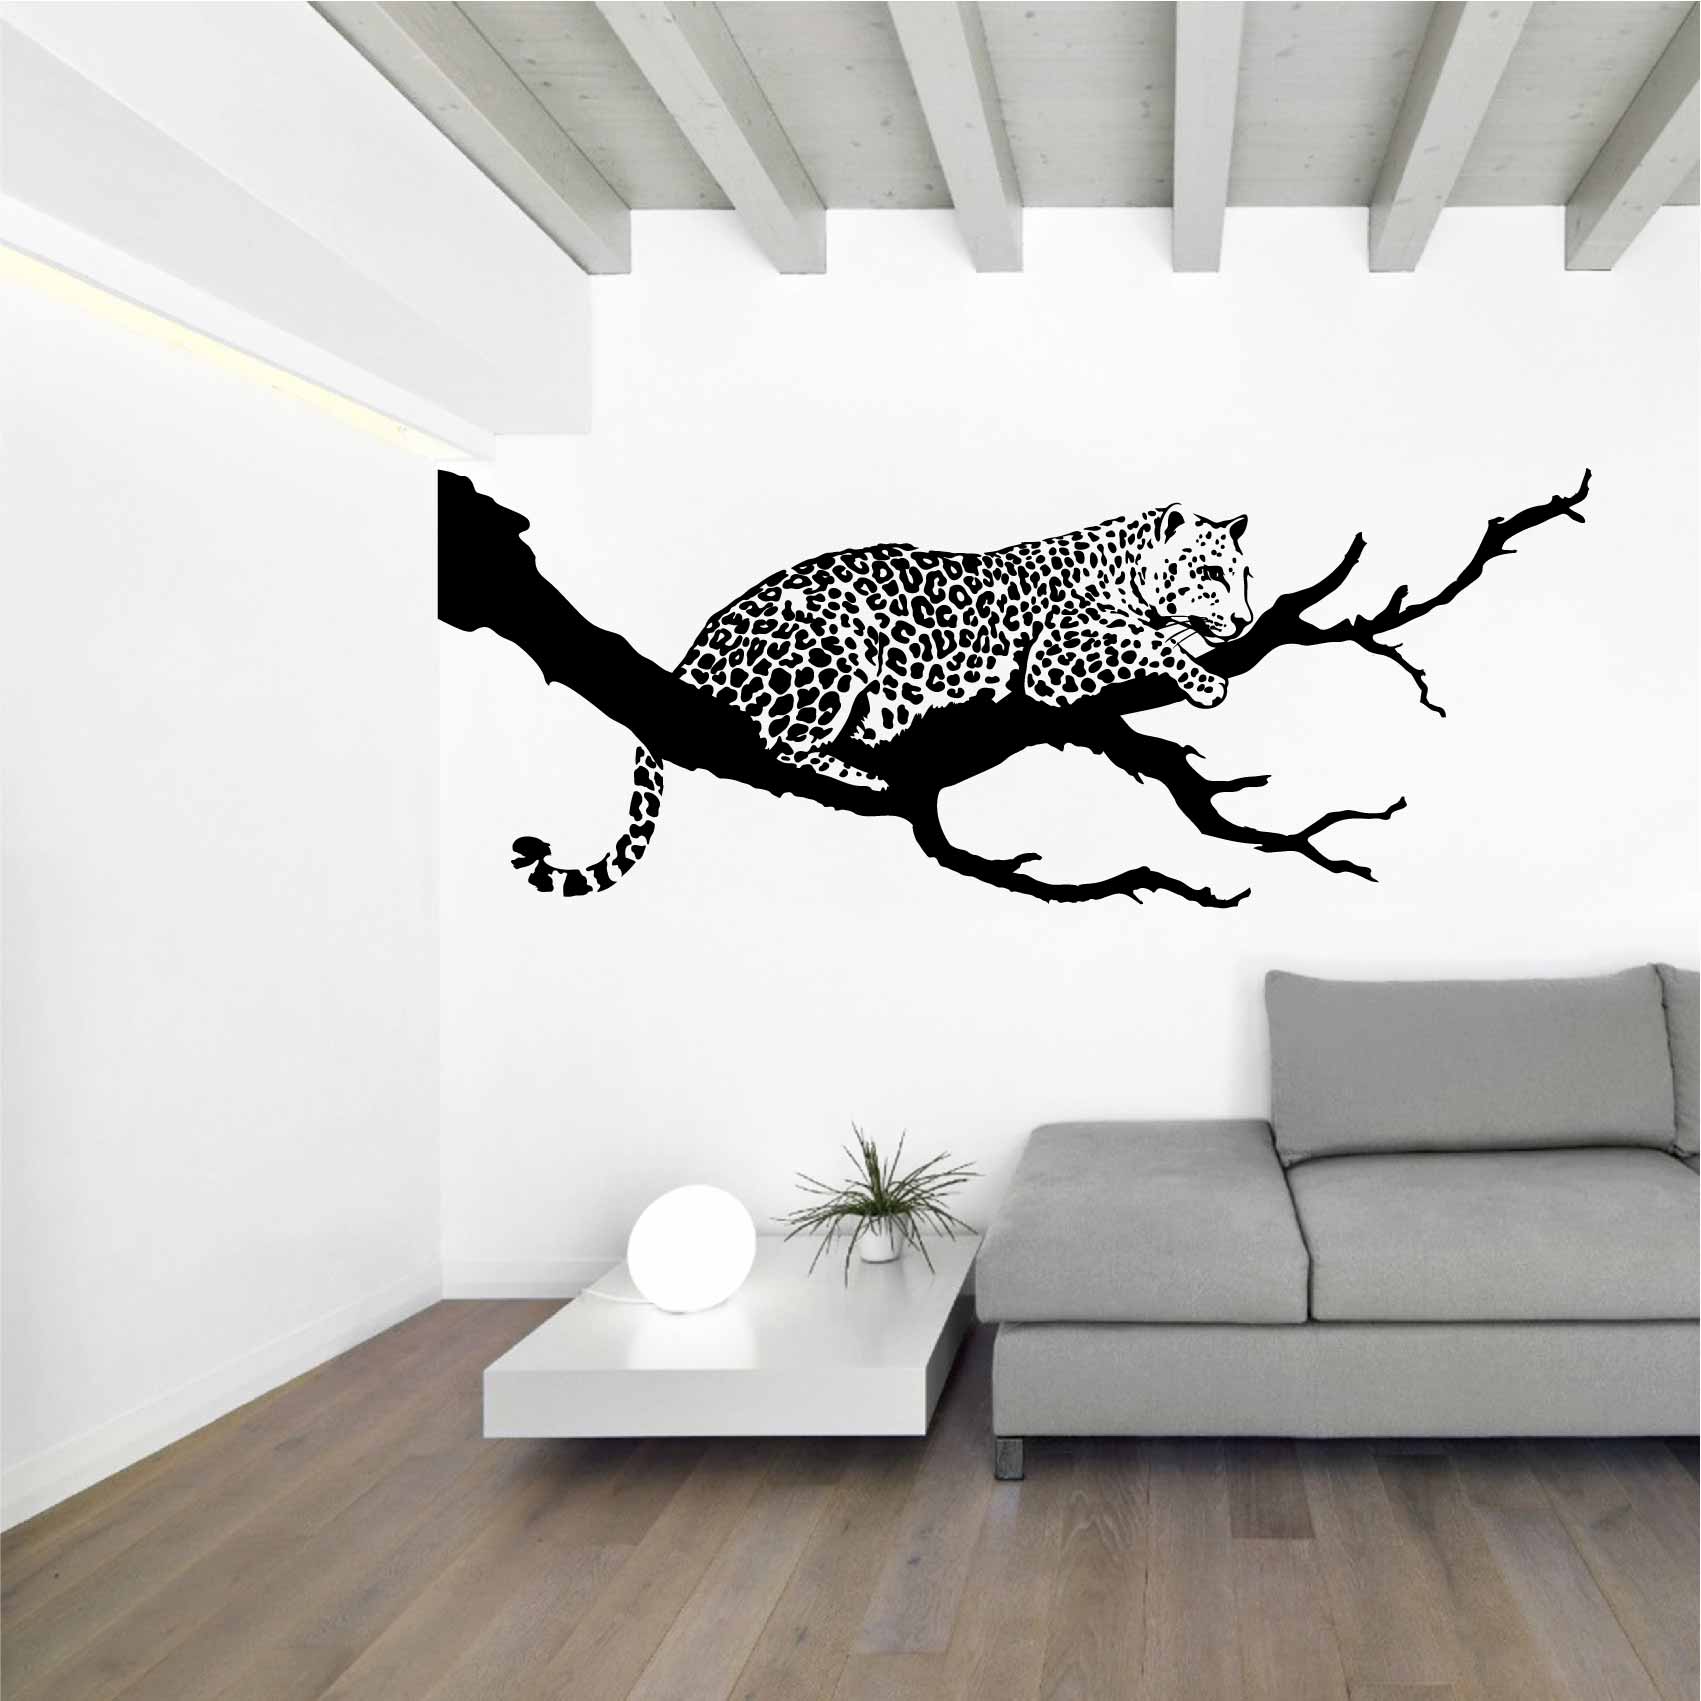 stickers-leopard-branche-ref15animauxsavane-stickers-animaux-savane-autocollant-muraux-afrique-sticker-mural-enfant-chambre-salon